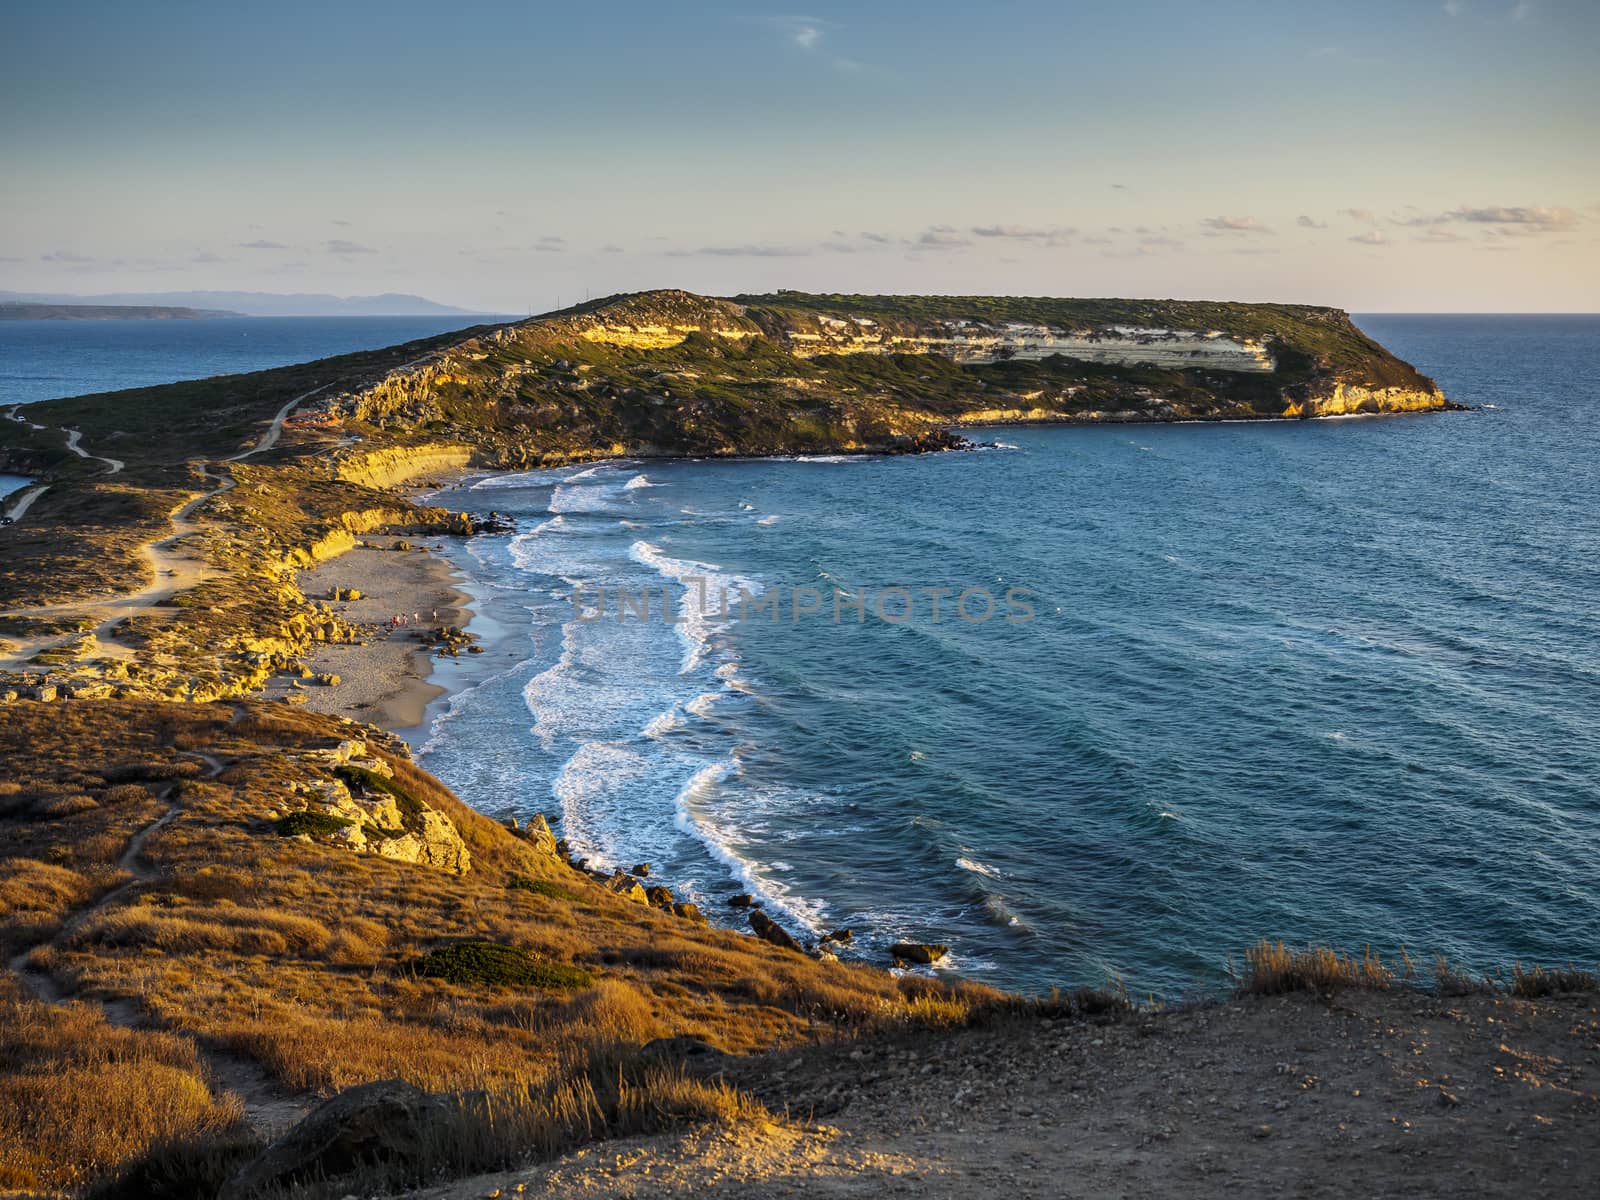 Sardinia Landscape by vinciber